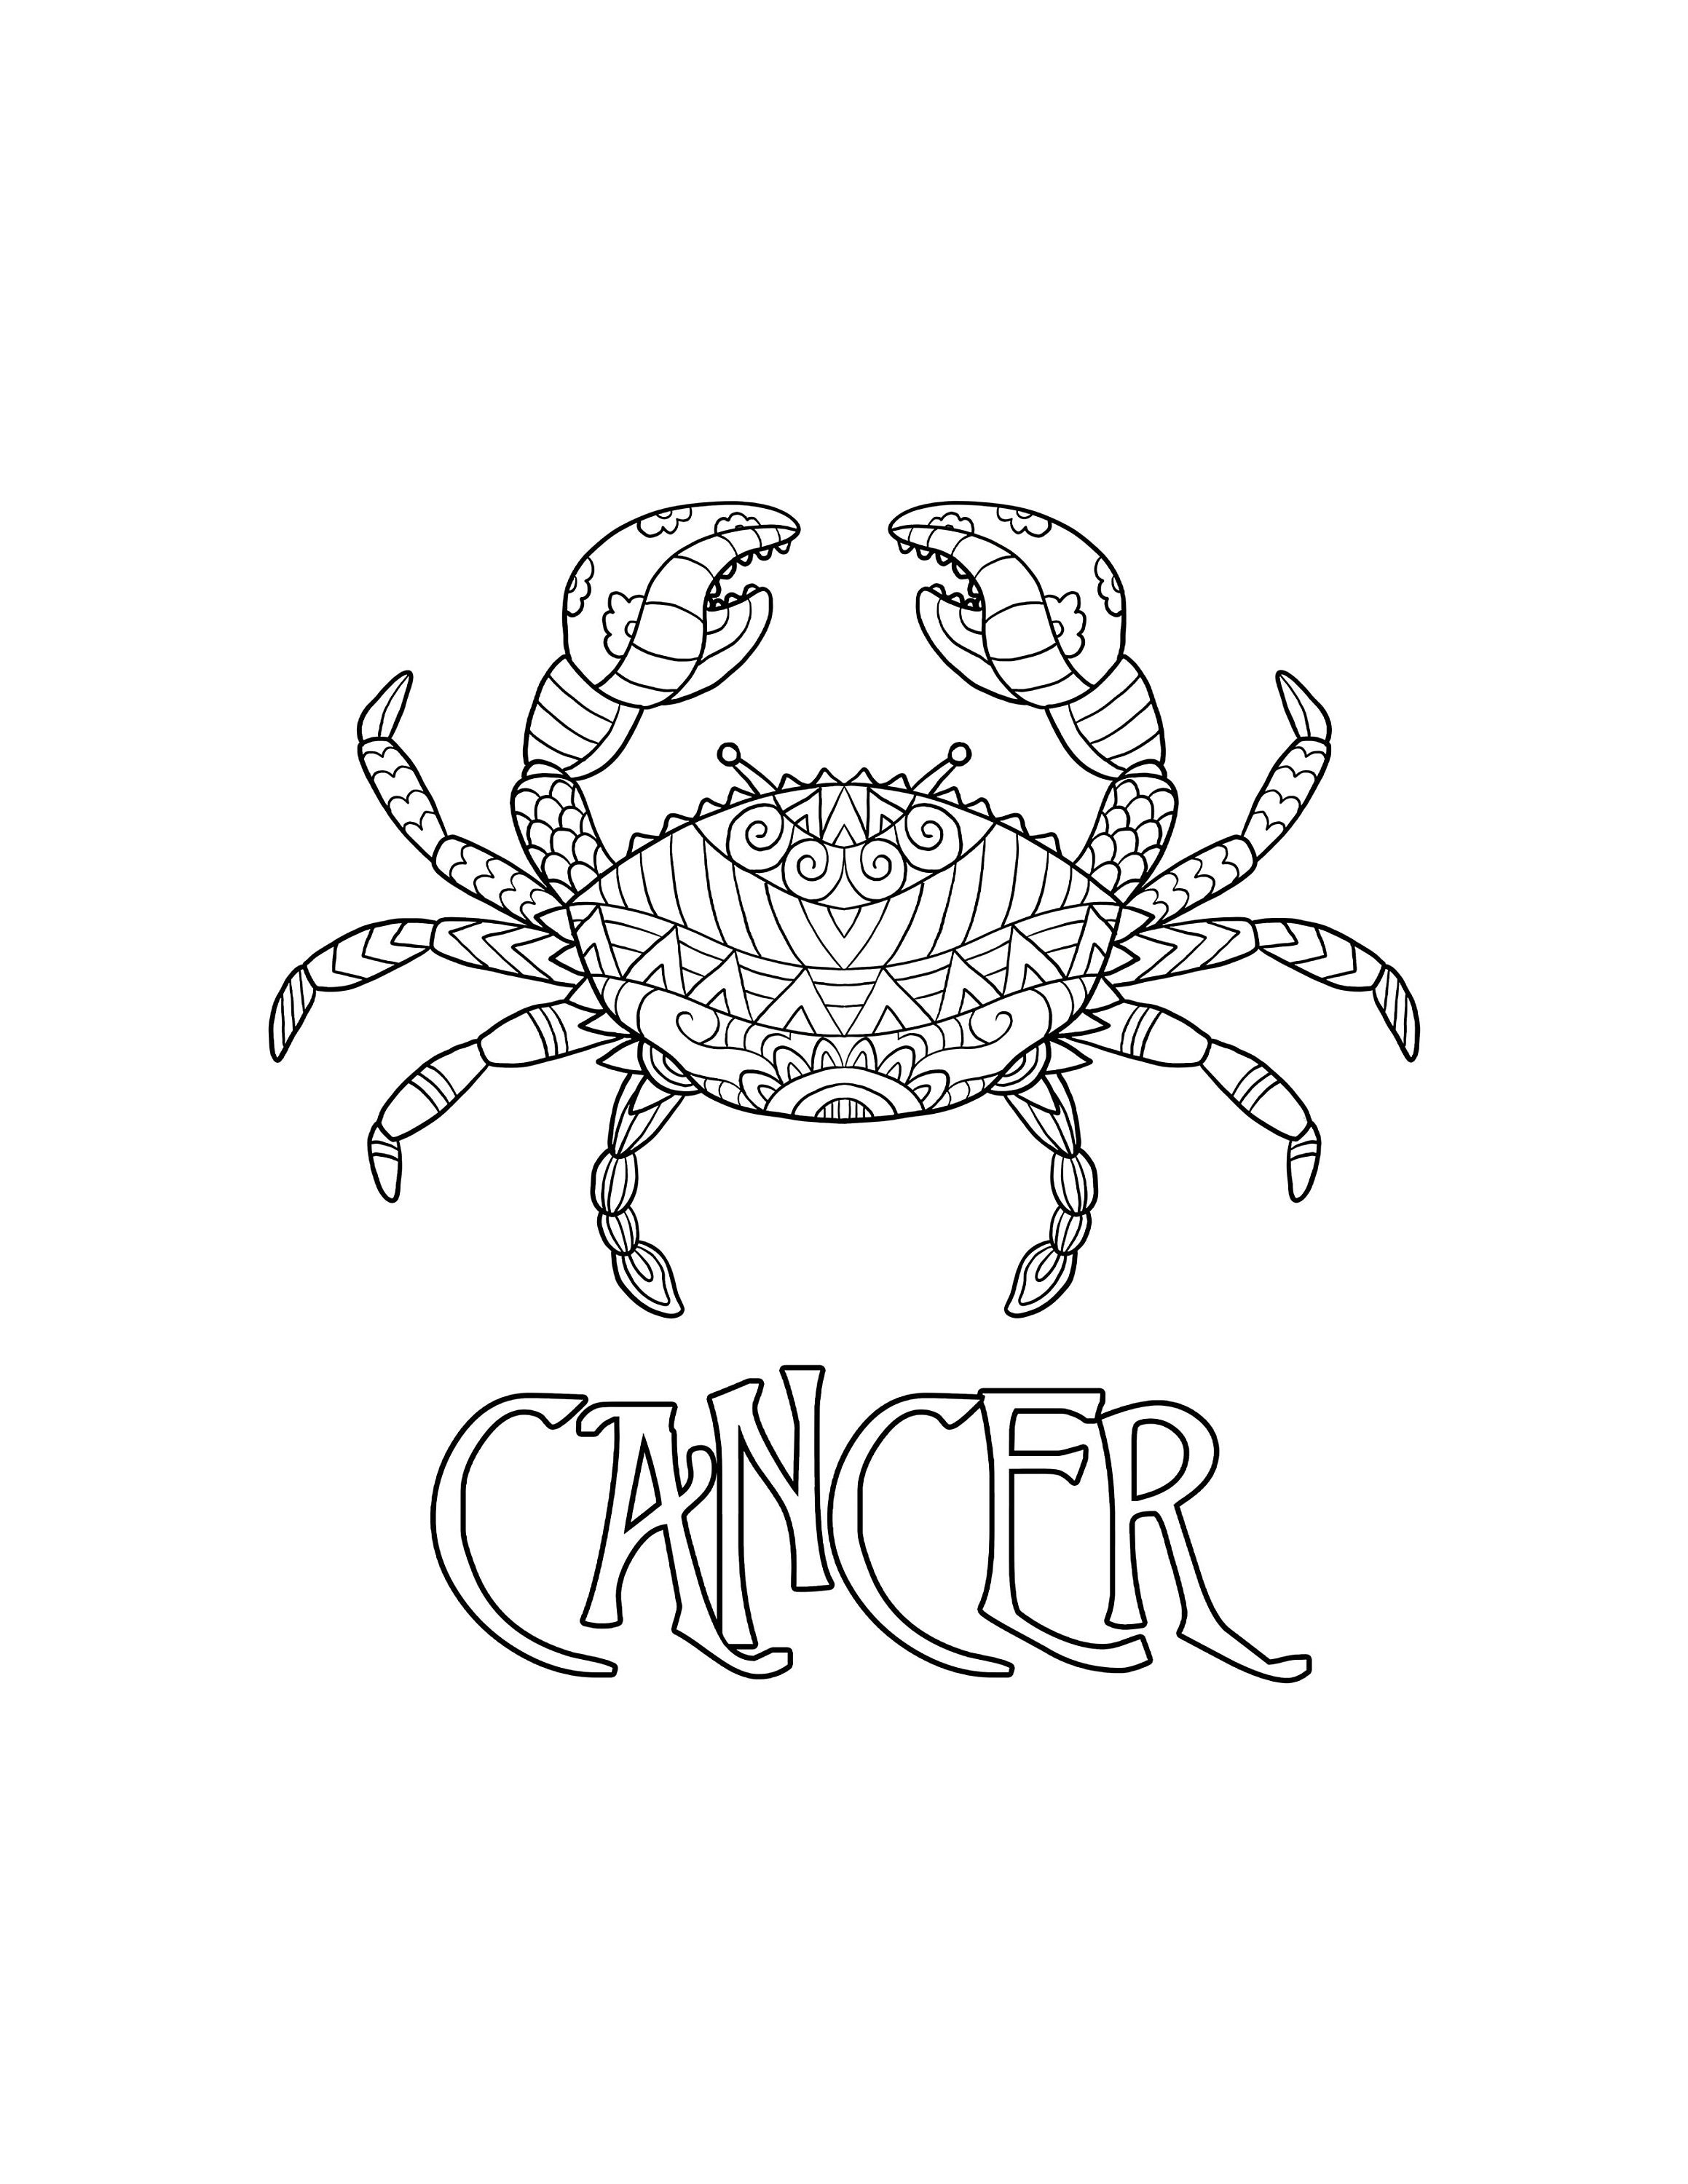 Cancer coloring page digital download printable astrological sign cancer zodiac sign pdf